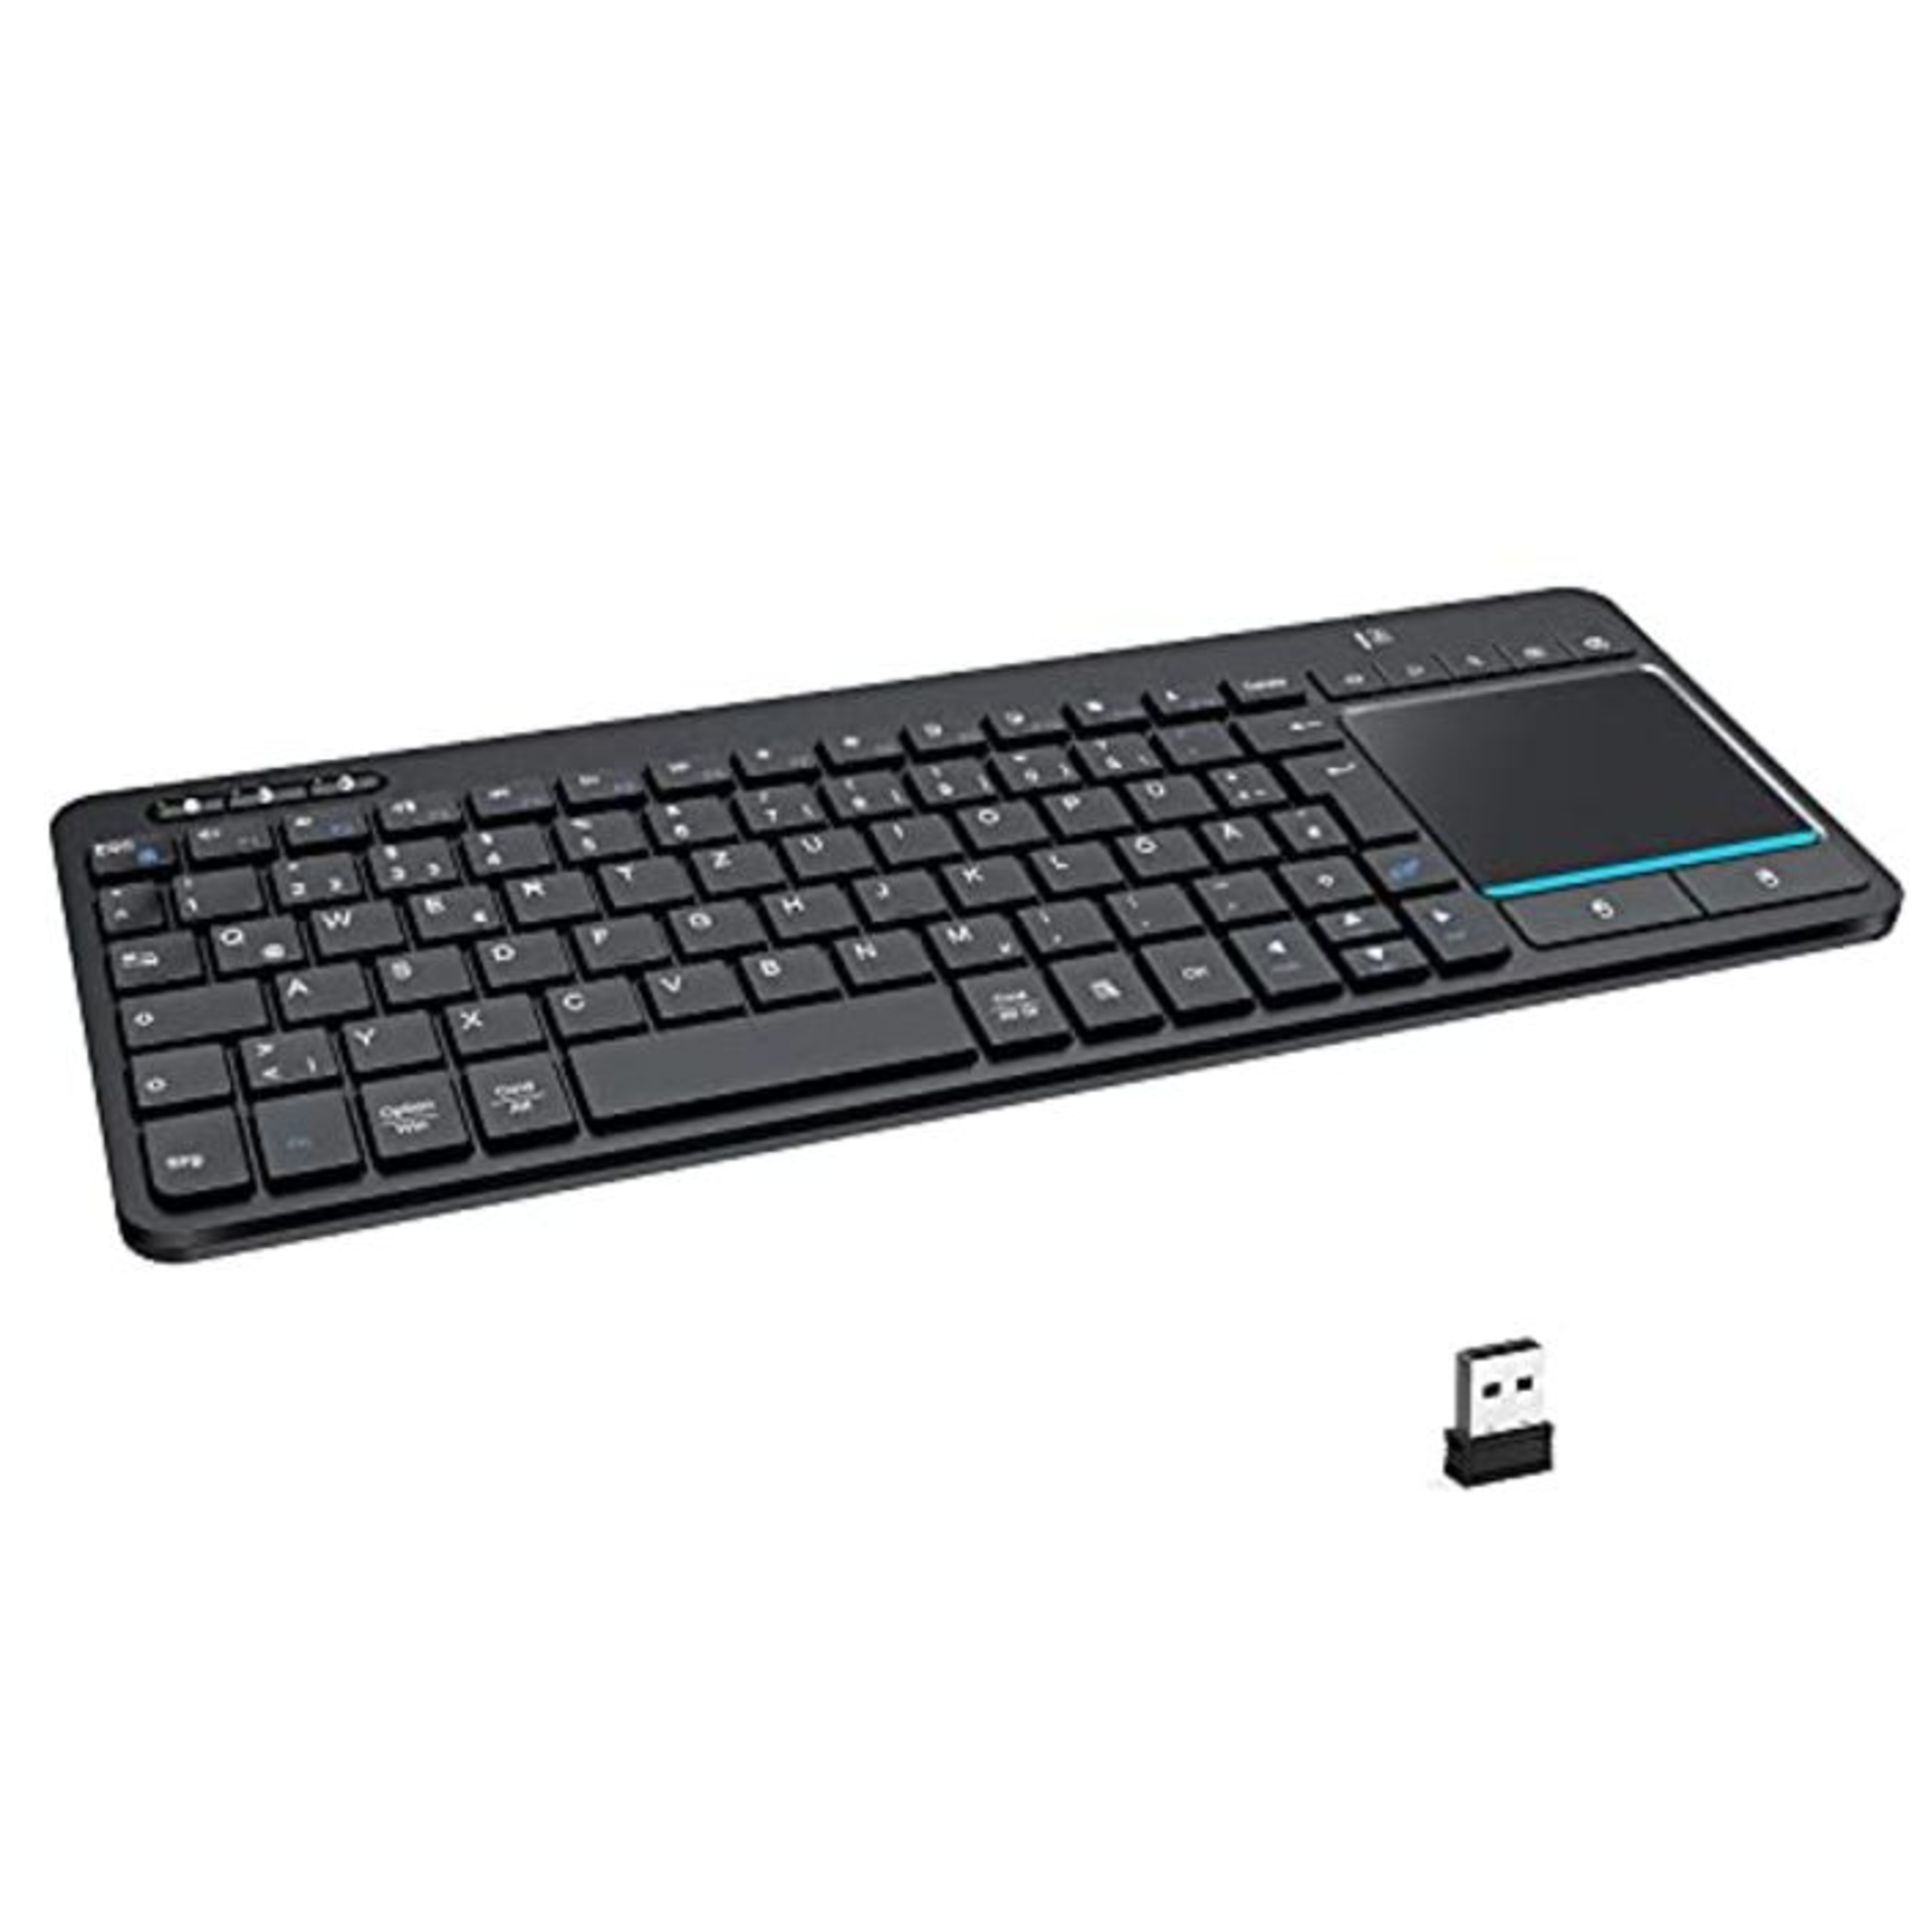 Dual Bluetooth + 2.4G Wireless Keyboard with Touchpad, Wireless QWERTZ Keyboard with G